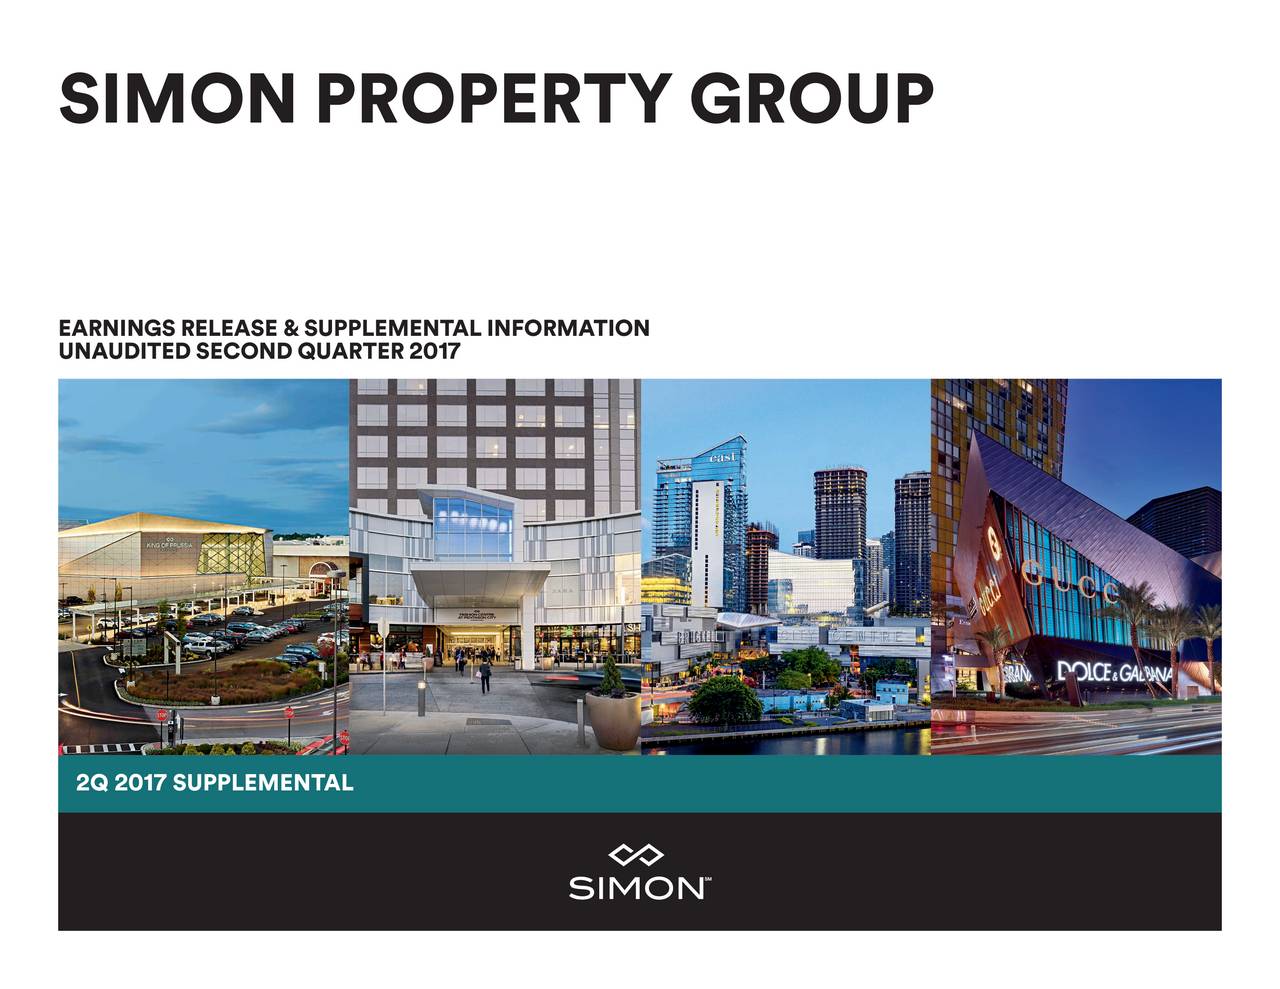 simon property group stock quote